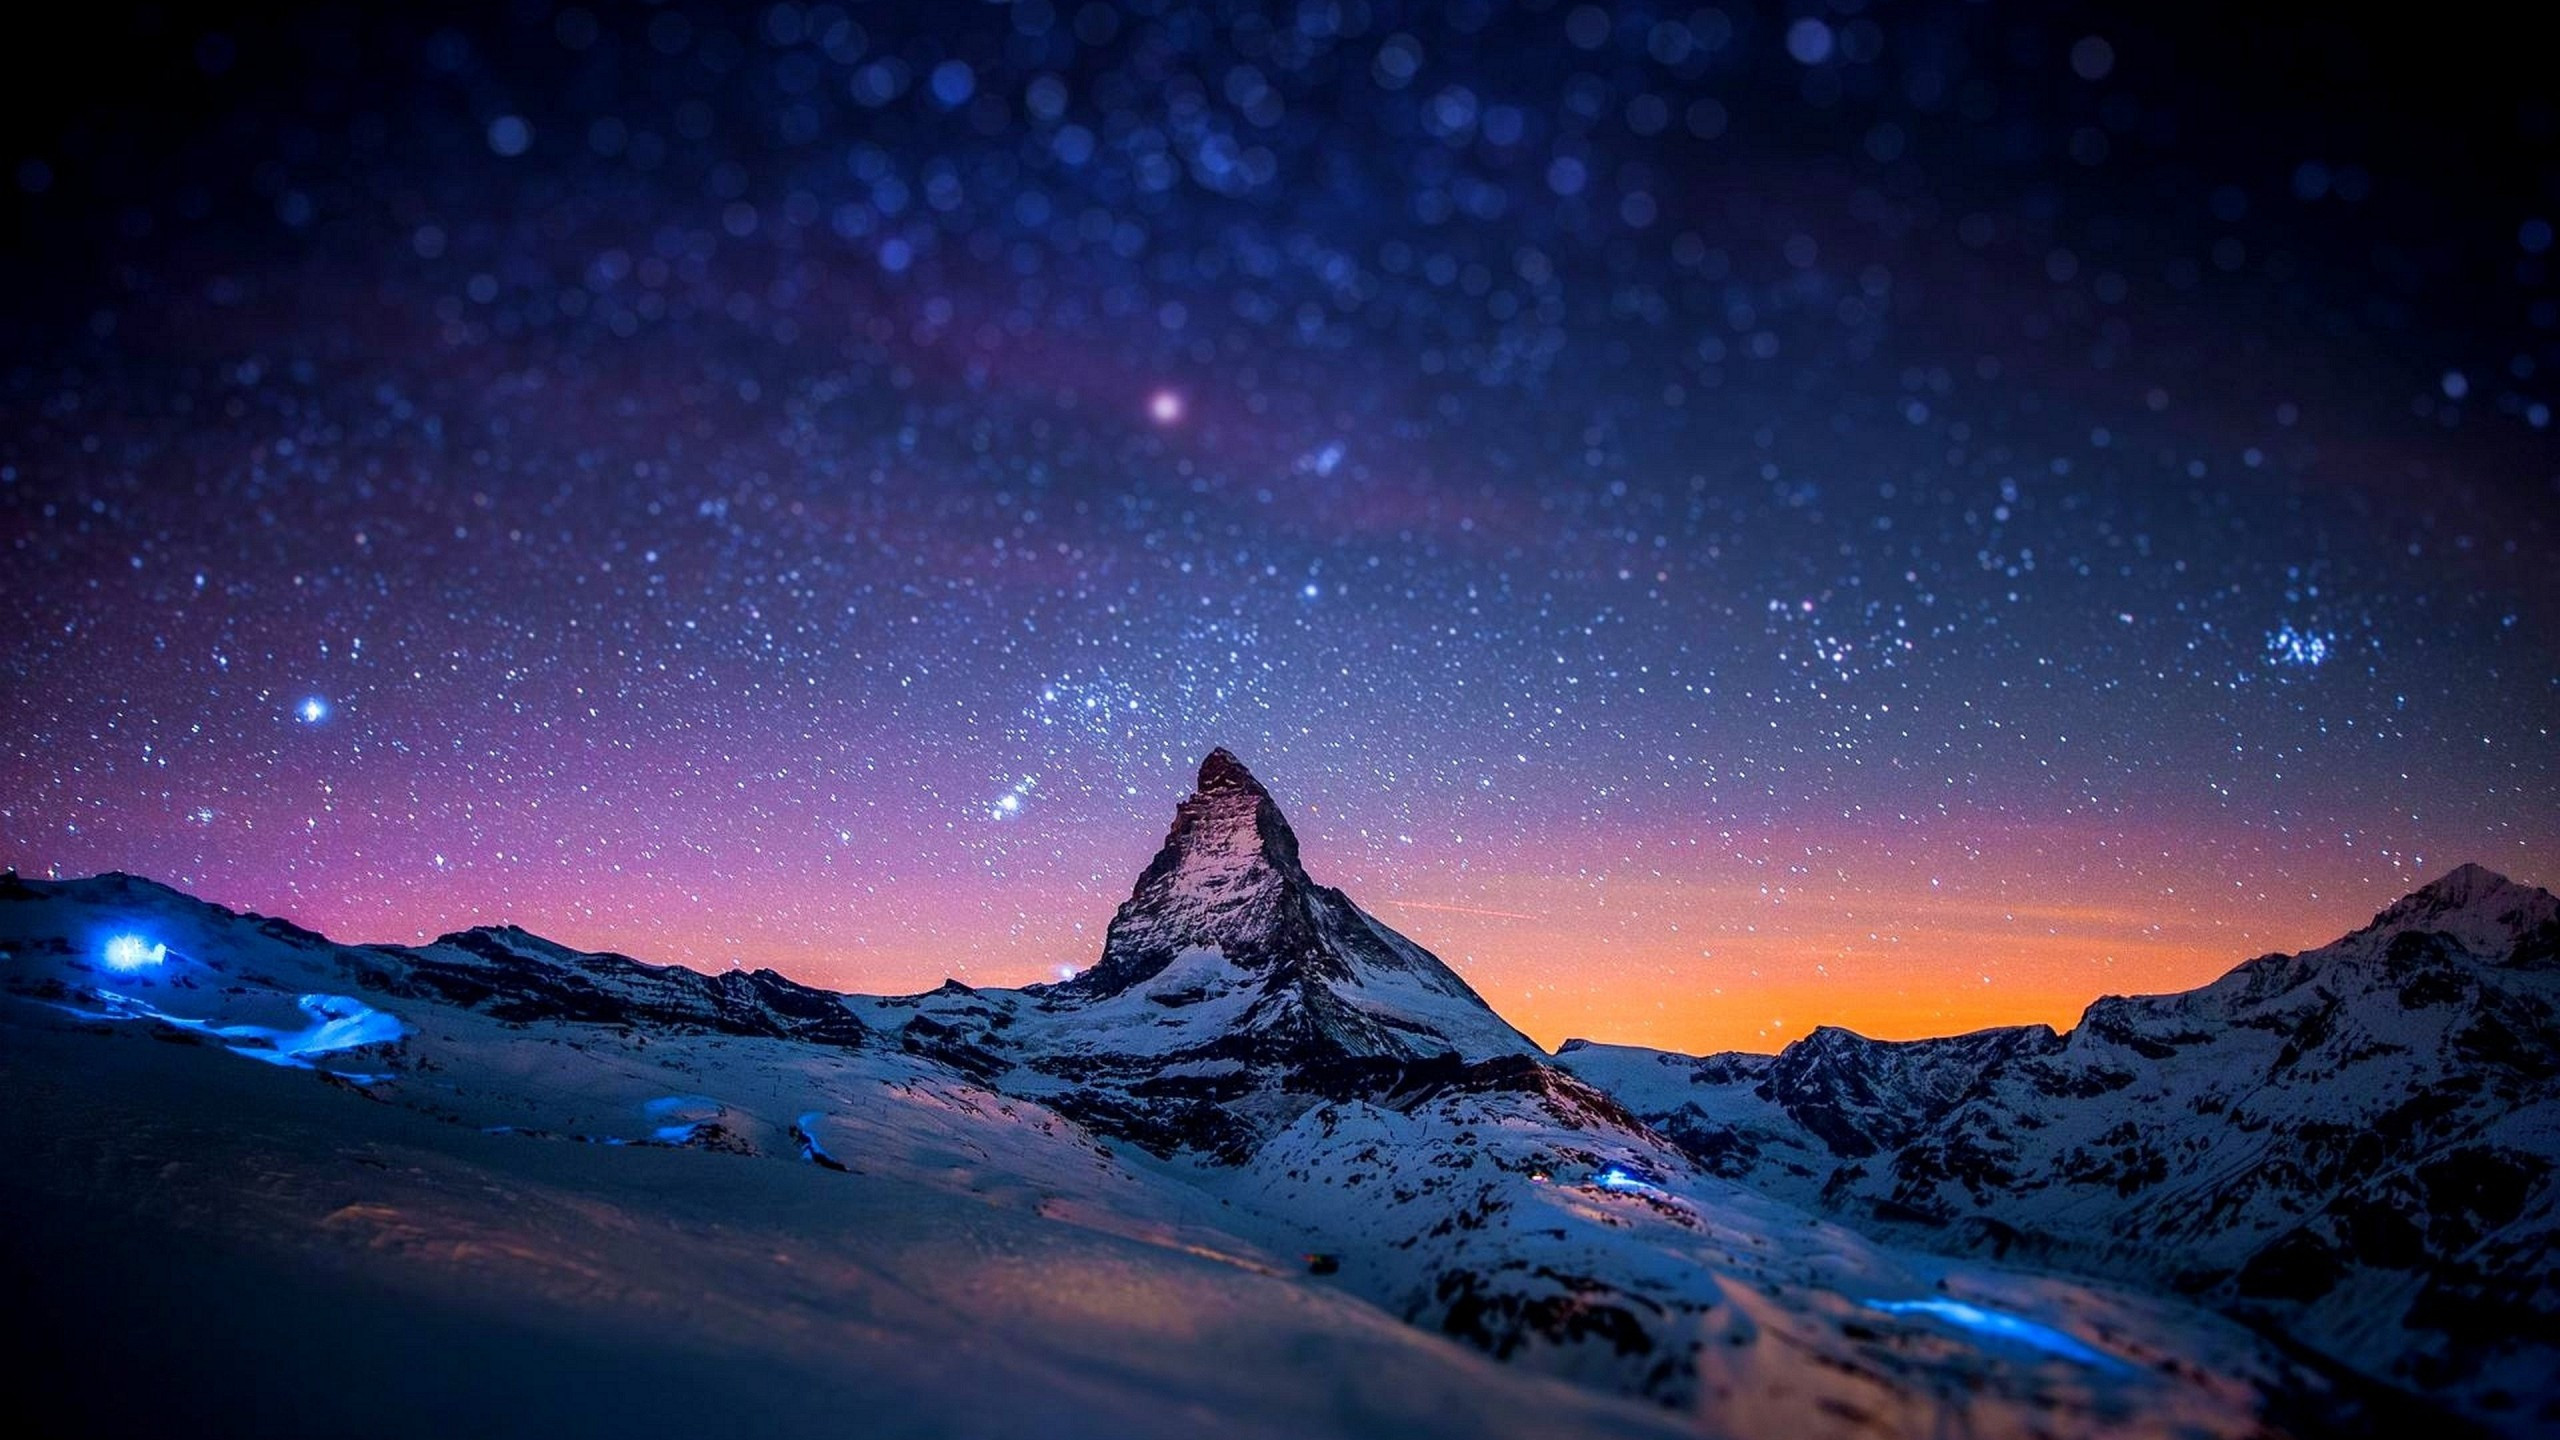 Download 2560x1440 Mountain, Night, Stars, Winter, Lights, Bokeh Wallpaper for iMac 27 inch